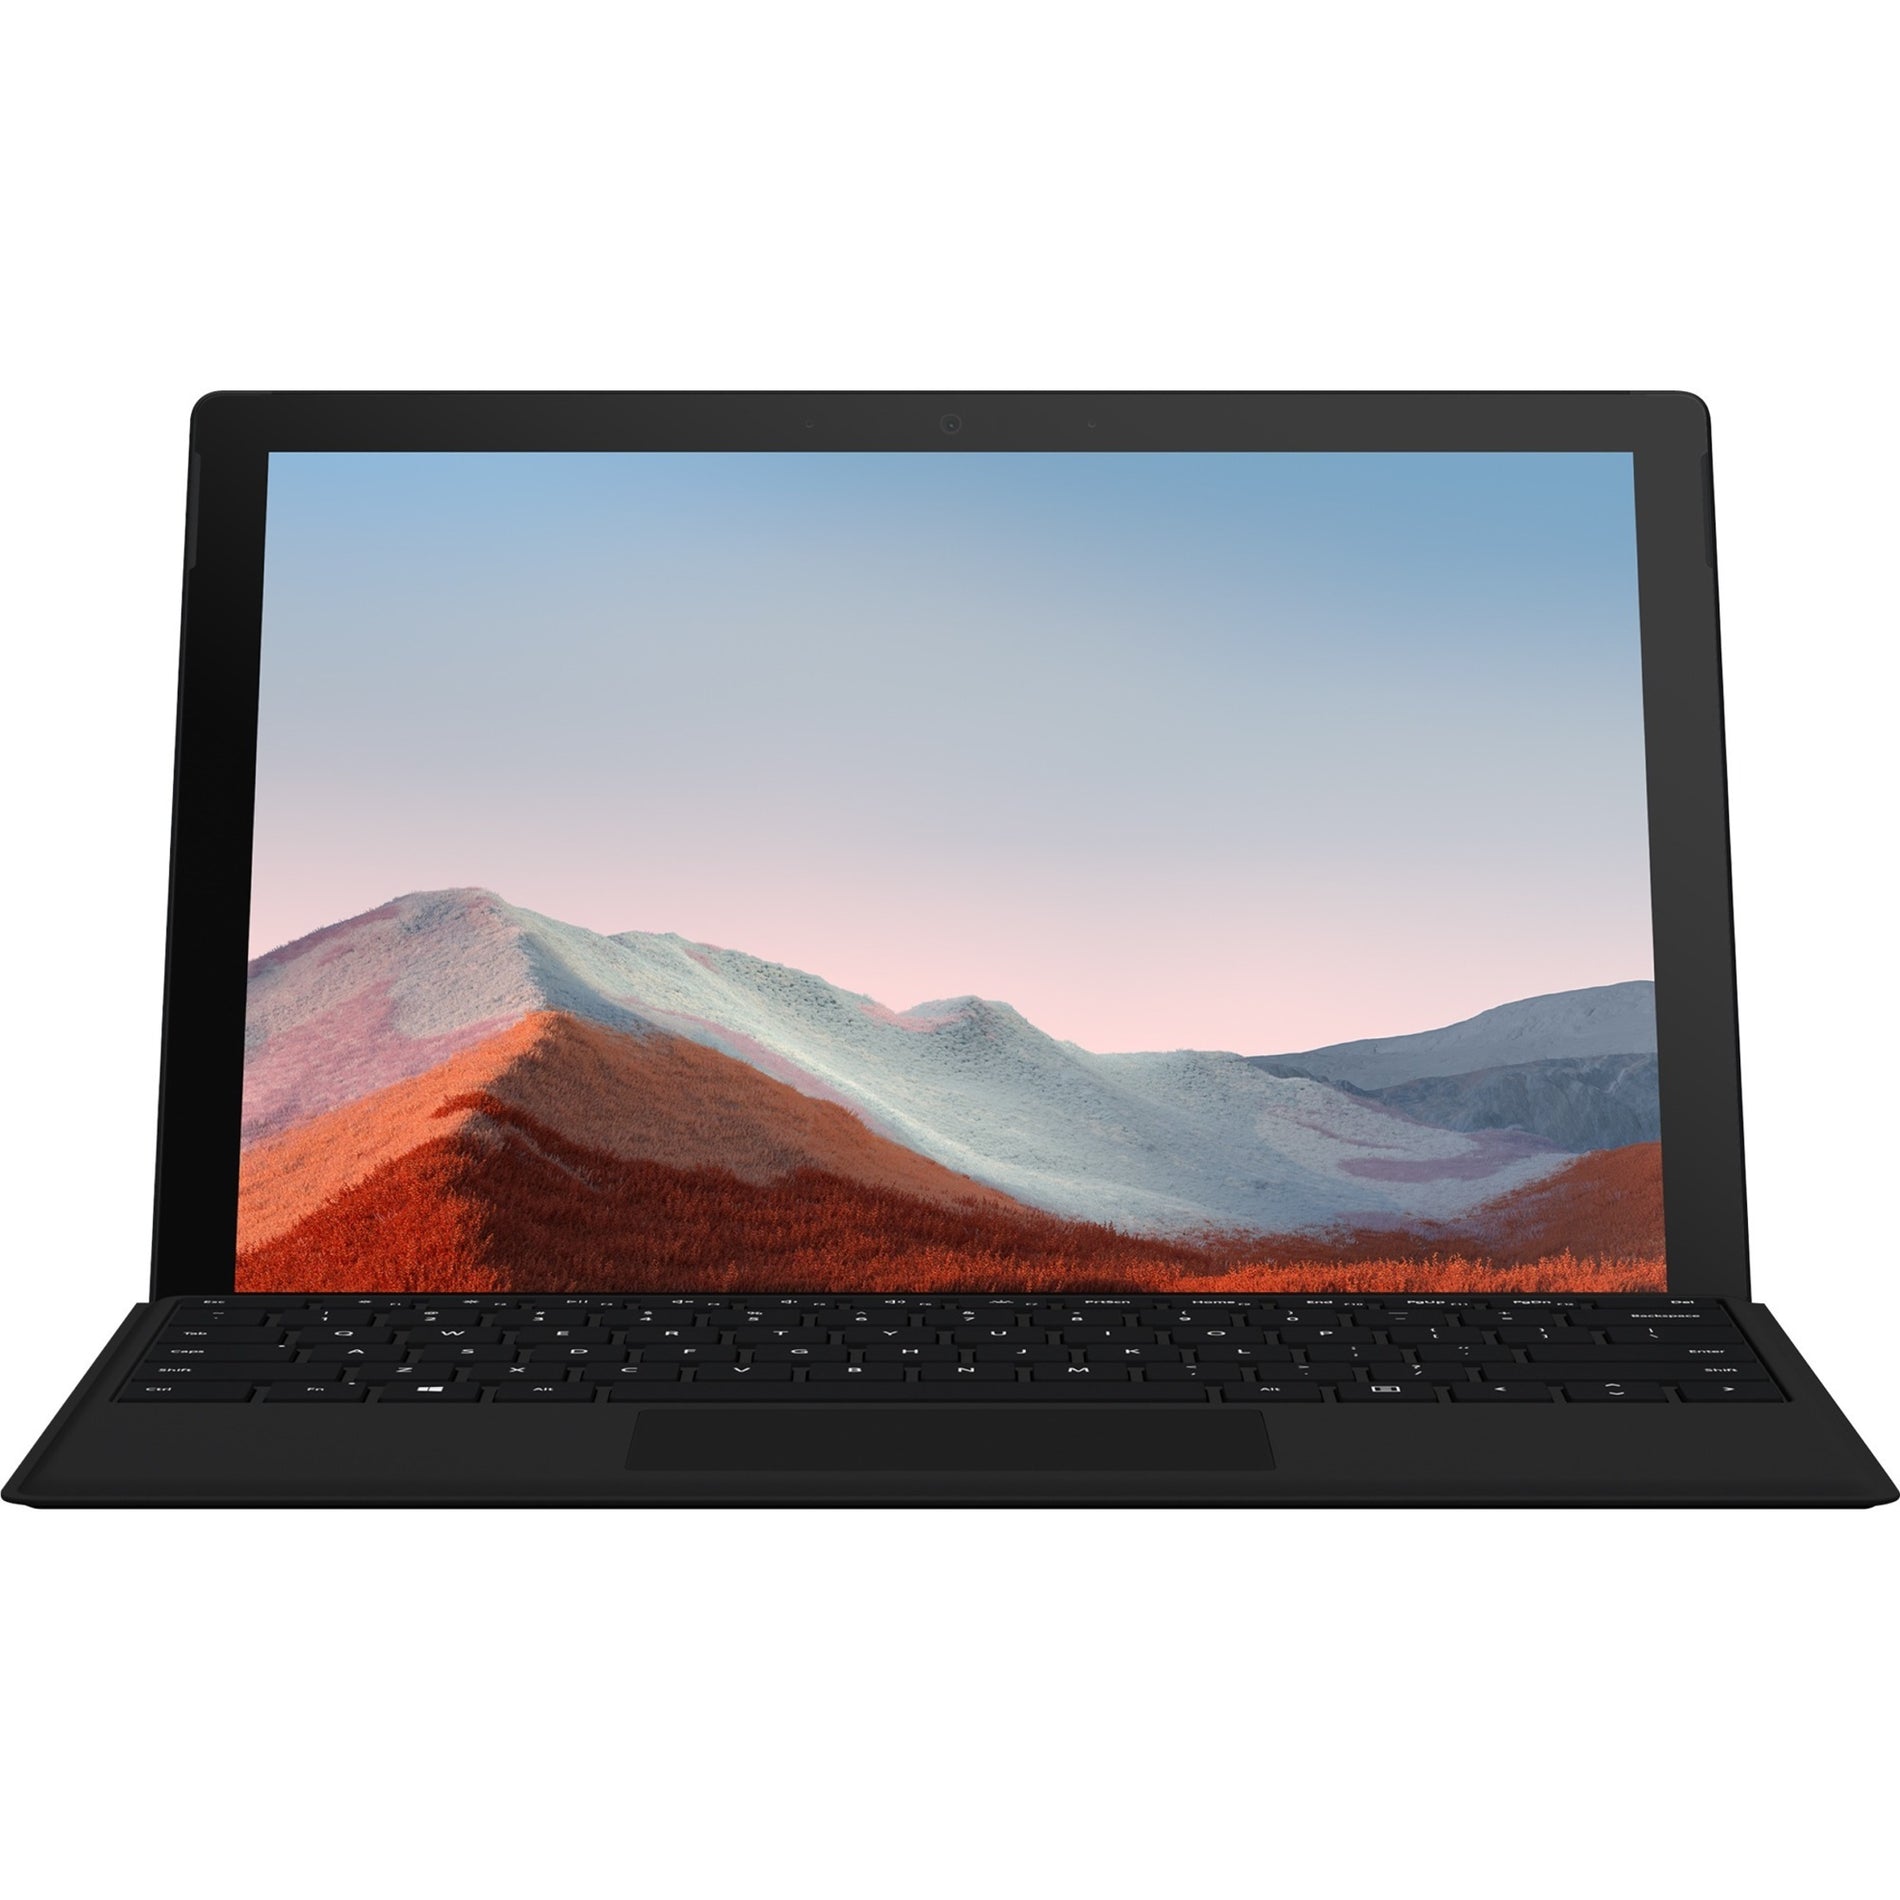 Microsoft 1YC-00002 Surface Pro 7+ Tablet, 12.3", Core i7, 16GB RAM, 256GB SSD, Windows 10 Pro